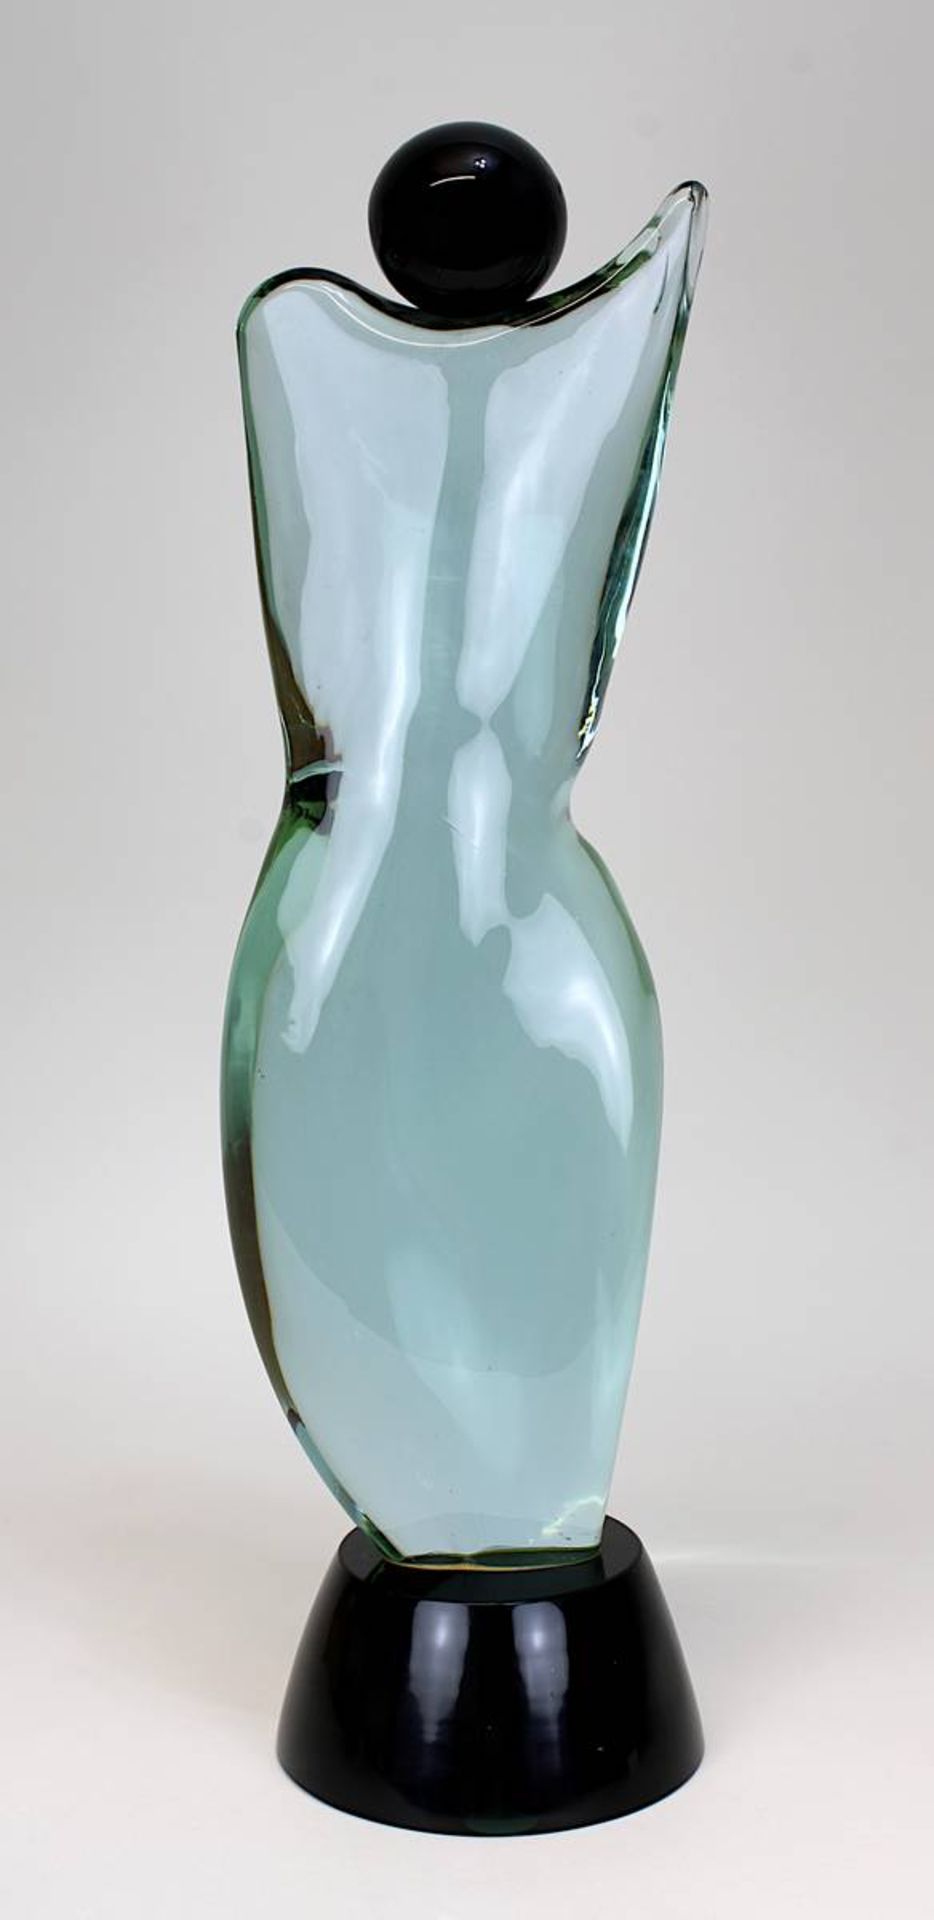 Antonio da Ros, Attr., Glasskulptur, Murano um 1960-70, Korpus aus durchgefärbtem Rauchglas, mit